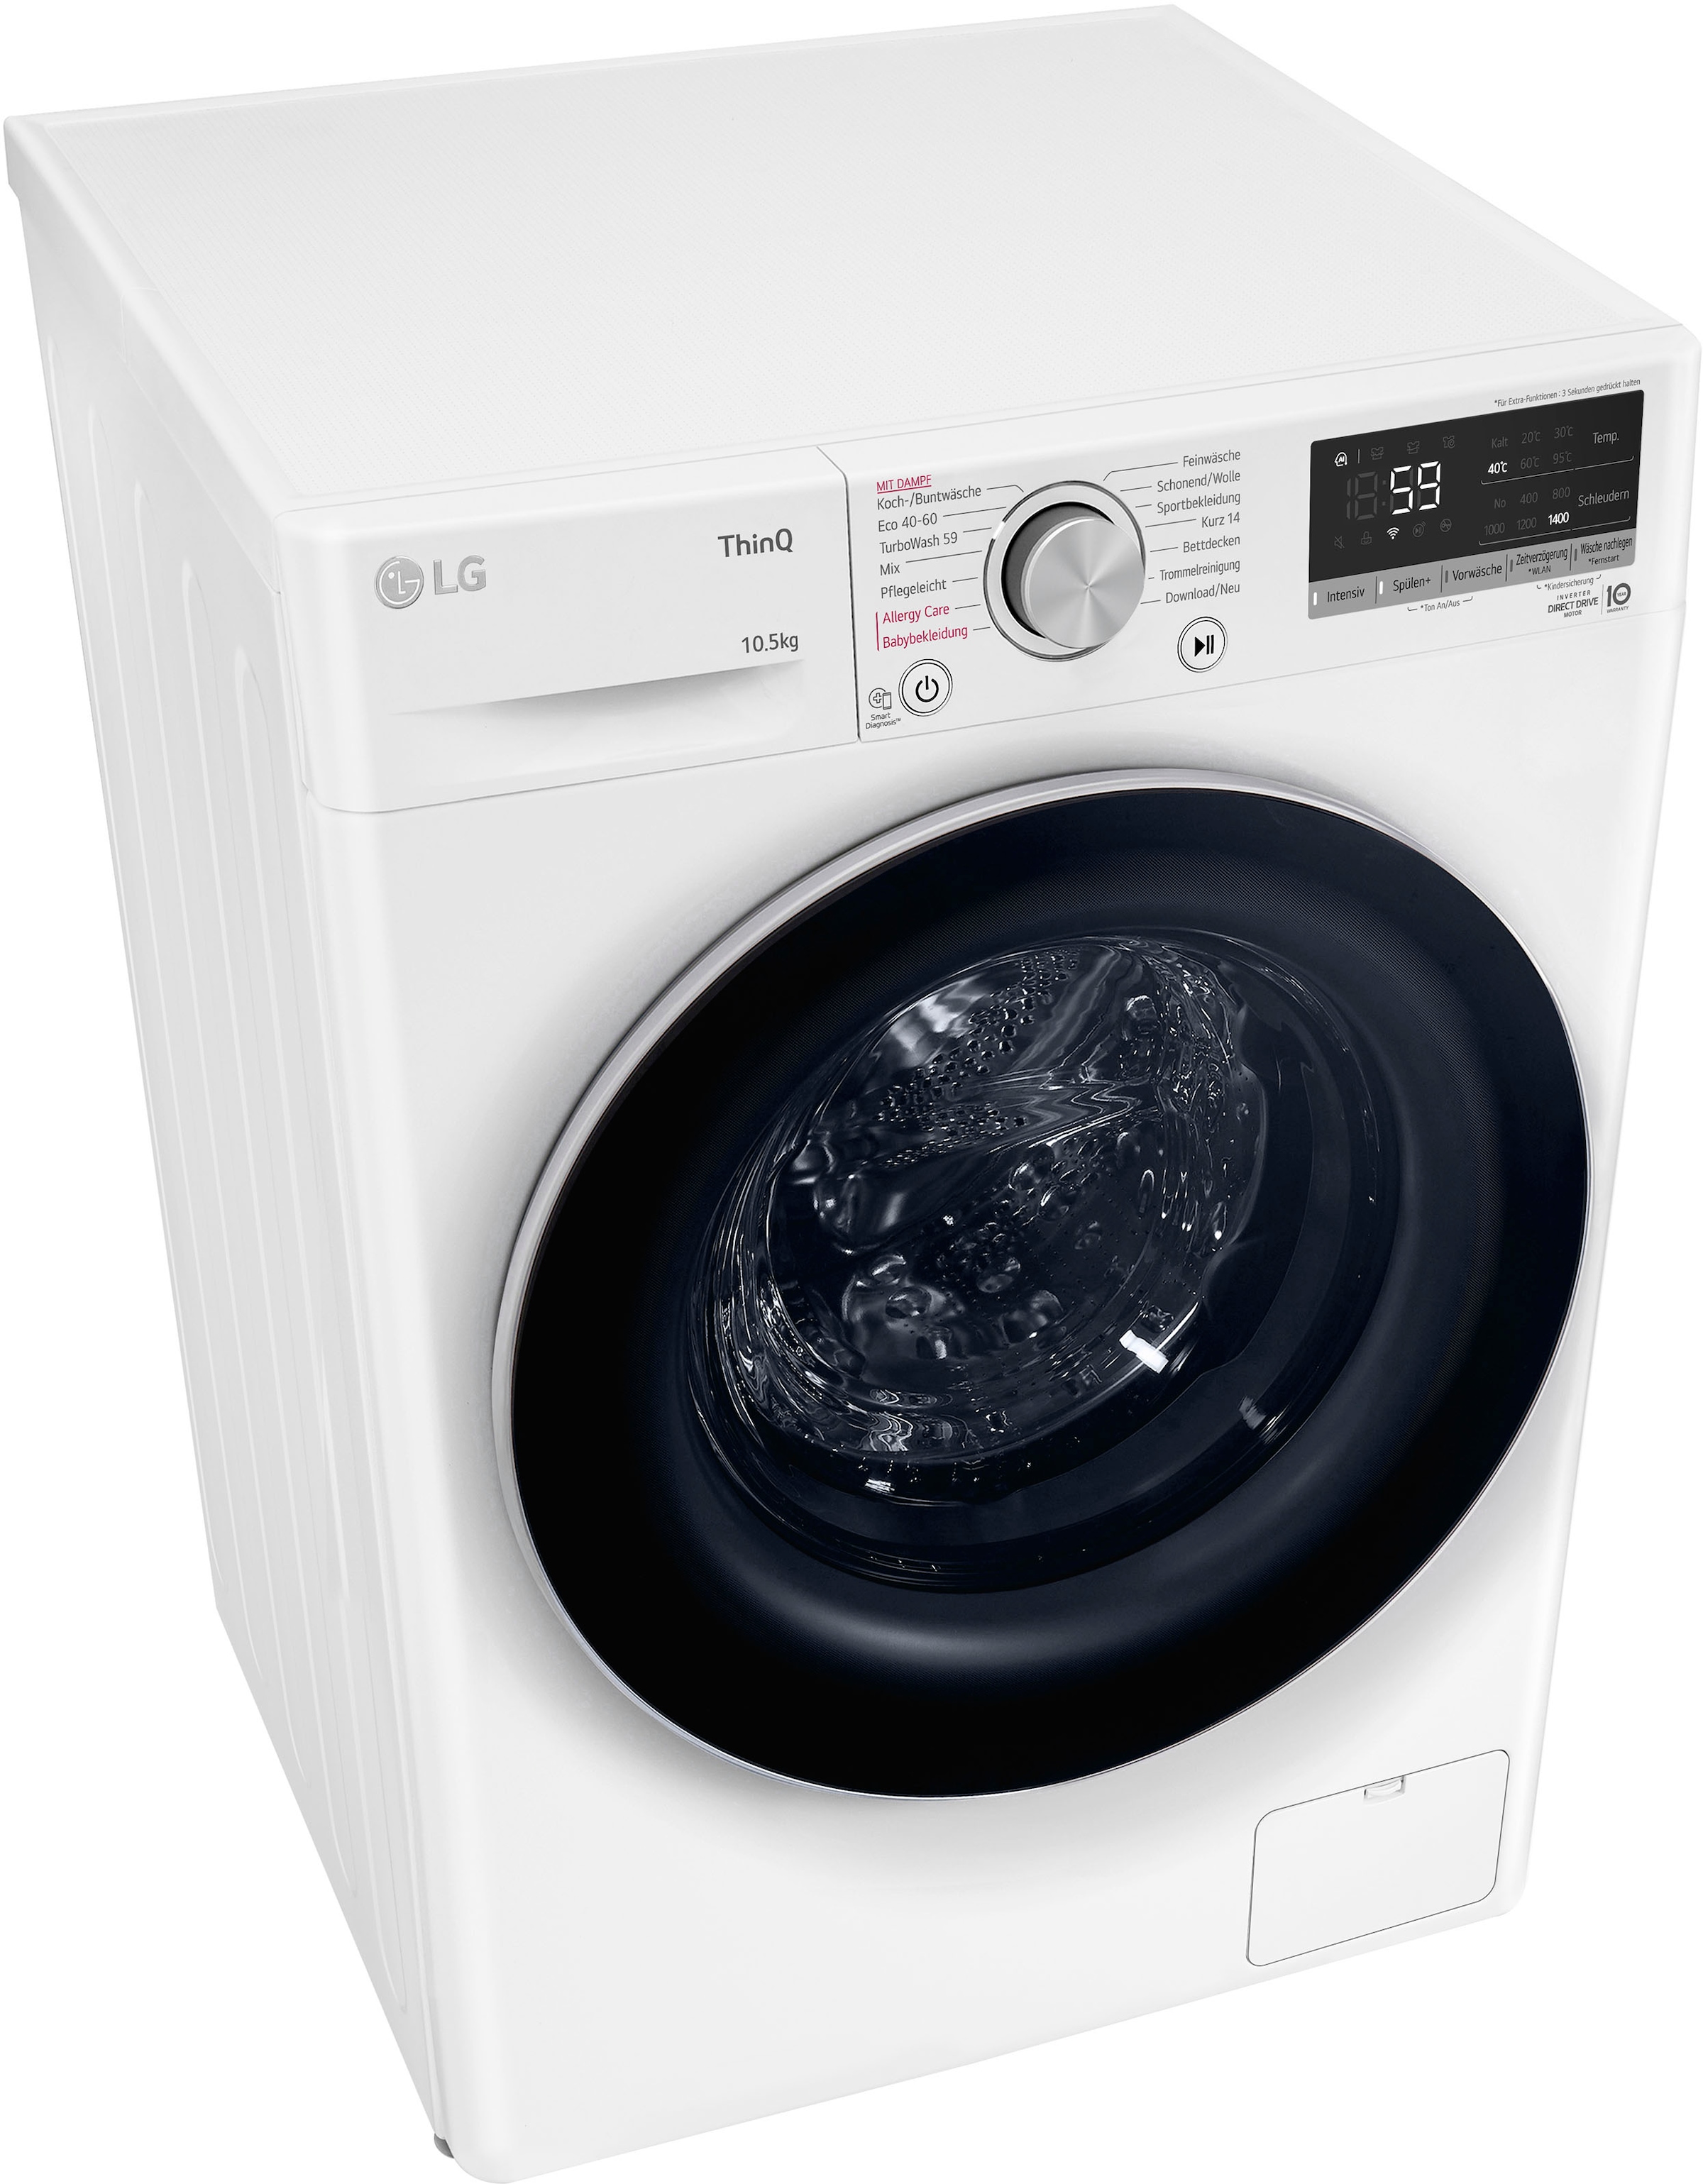 LG Waschmaschine 1400 U/min kg, »F4WV70X1«, F4WV70X1, 10,5 bestellen